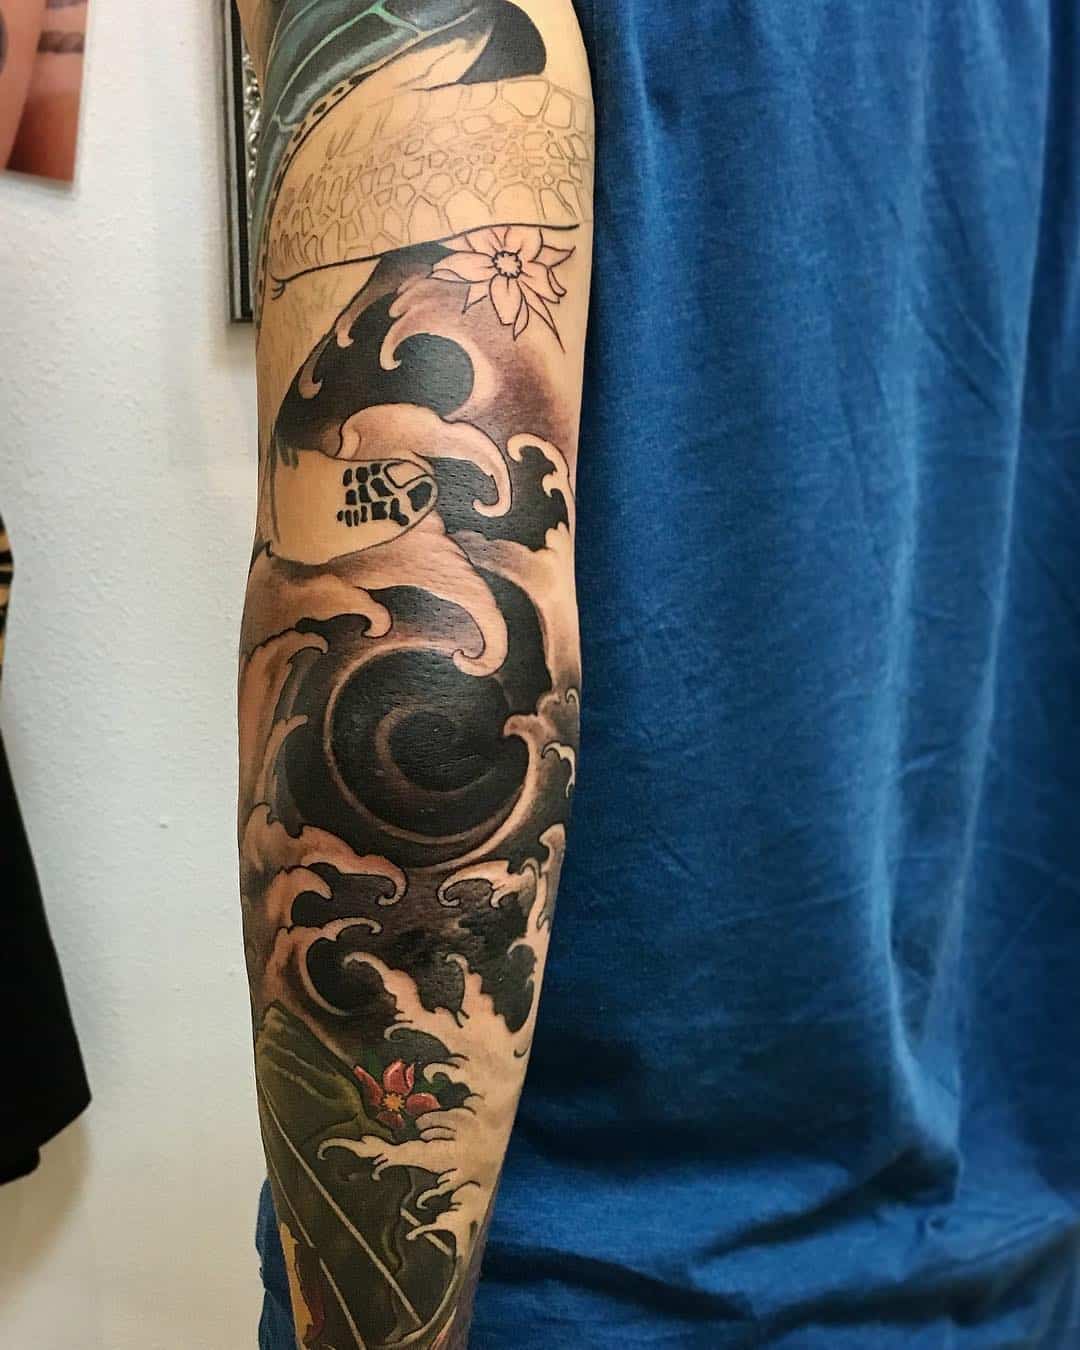 SinkingIN Tattoos on Twitter Snuck this elbow gap filler into an empty  space Japanese tattoo skull sinkingintattoos folkestone kent ink  httpstcoAfTz6rPKZP  X